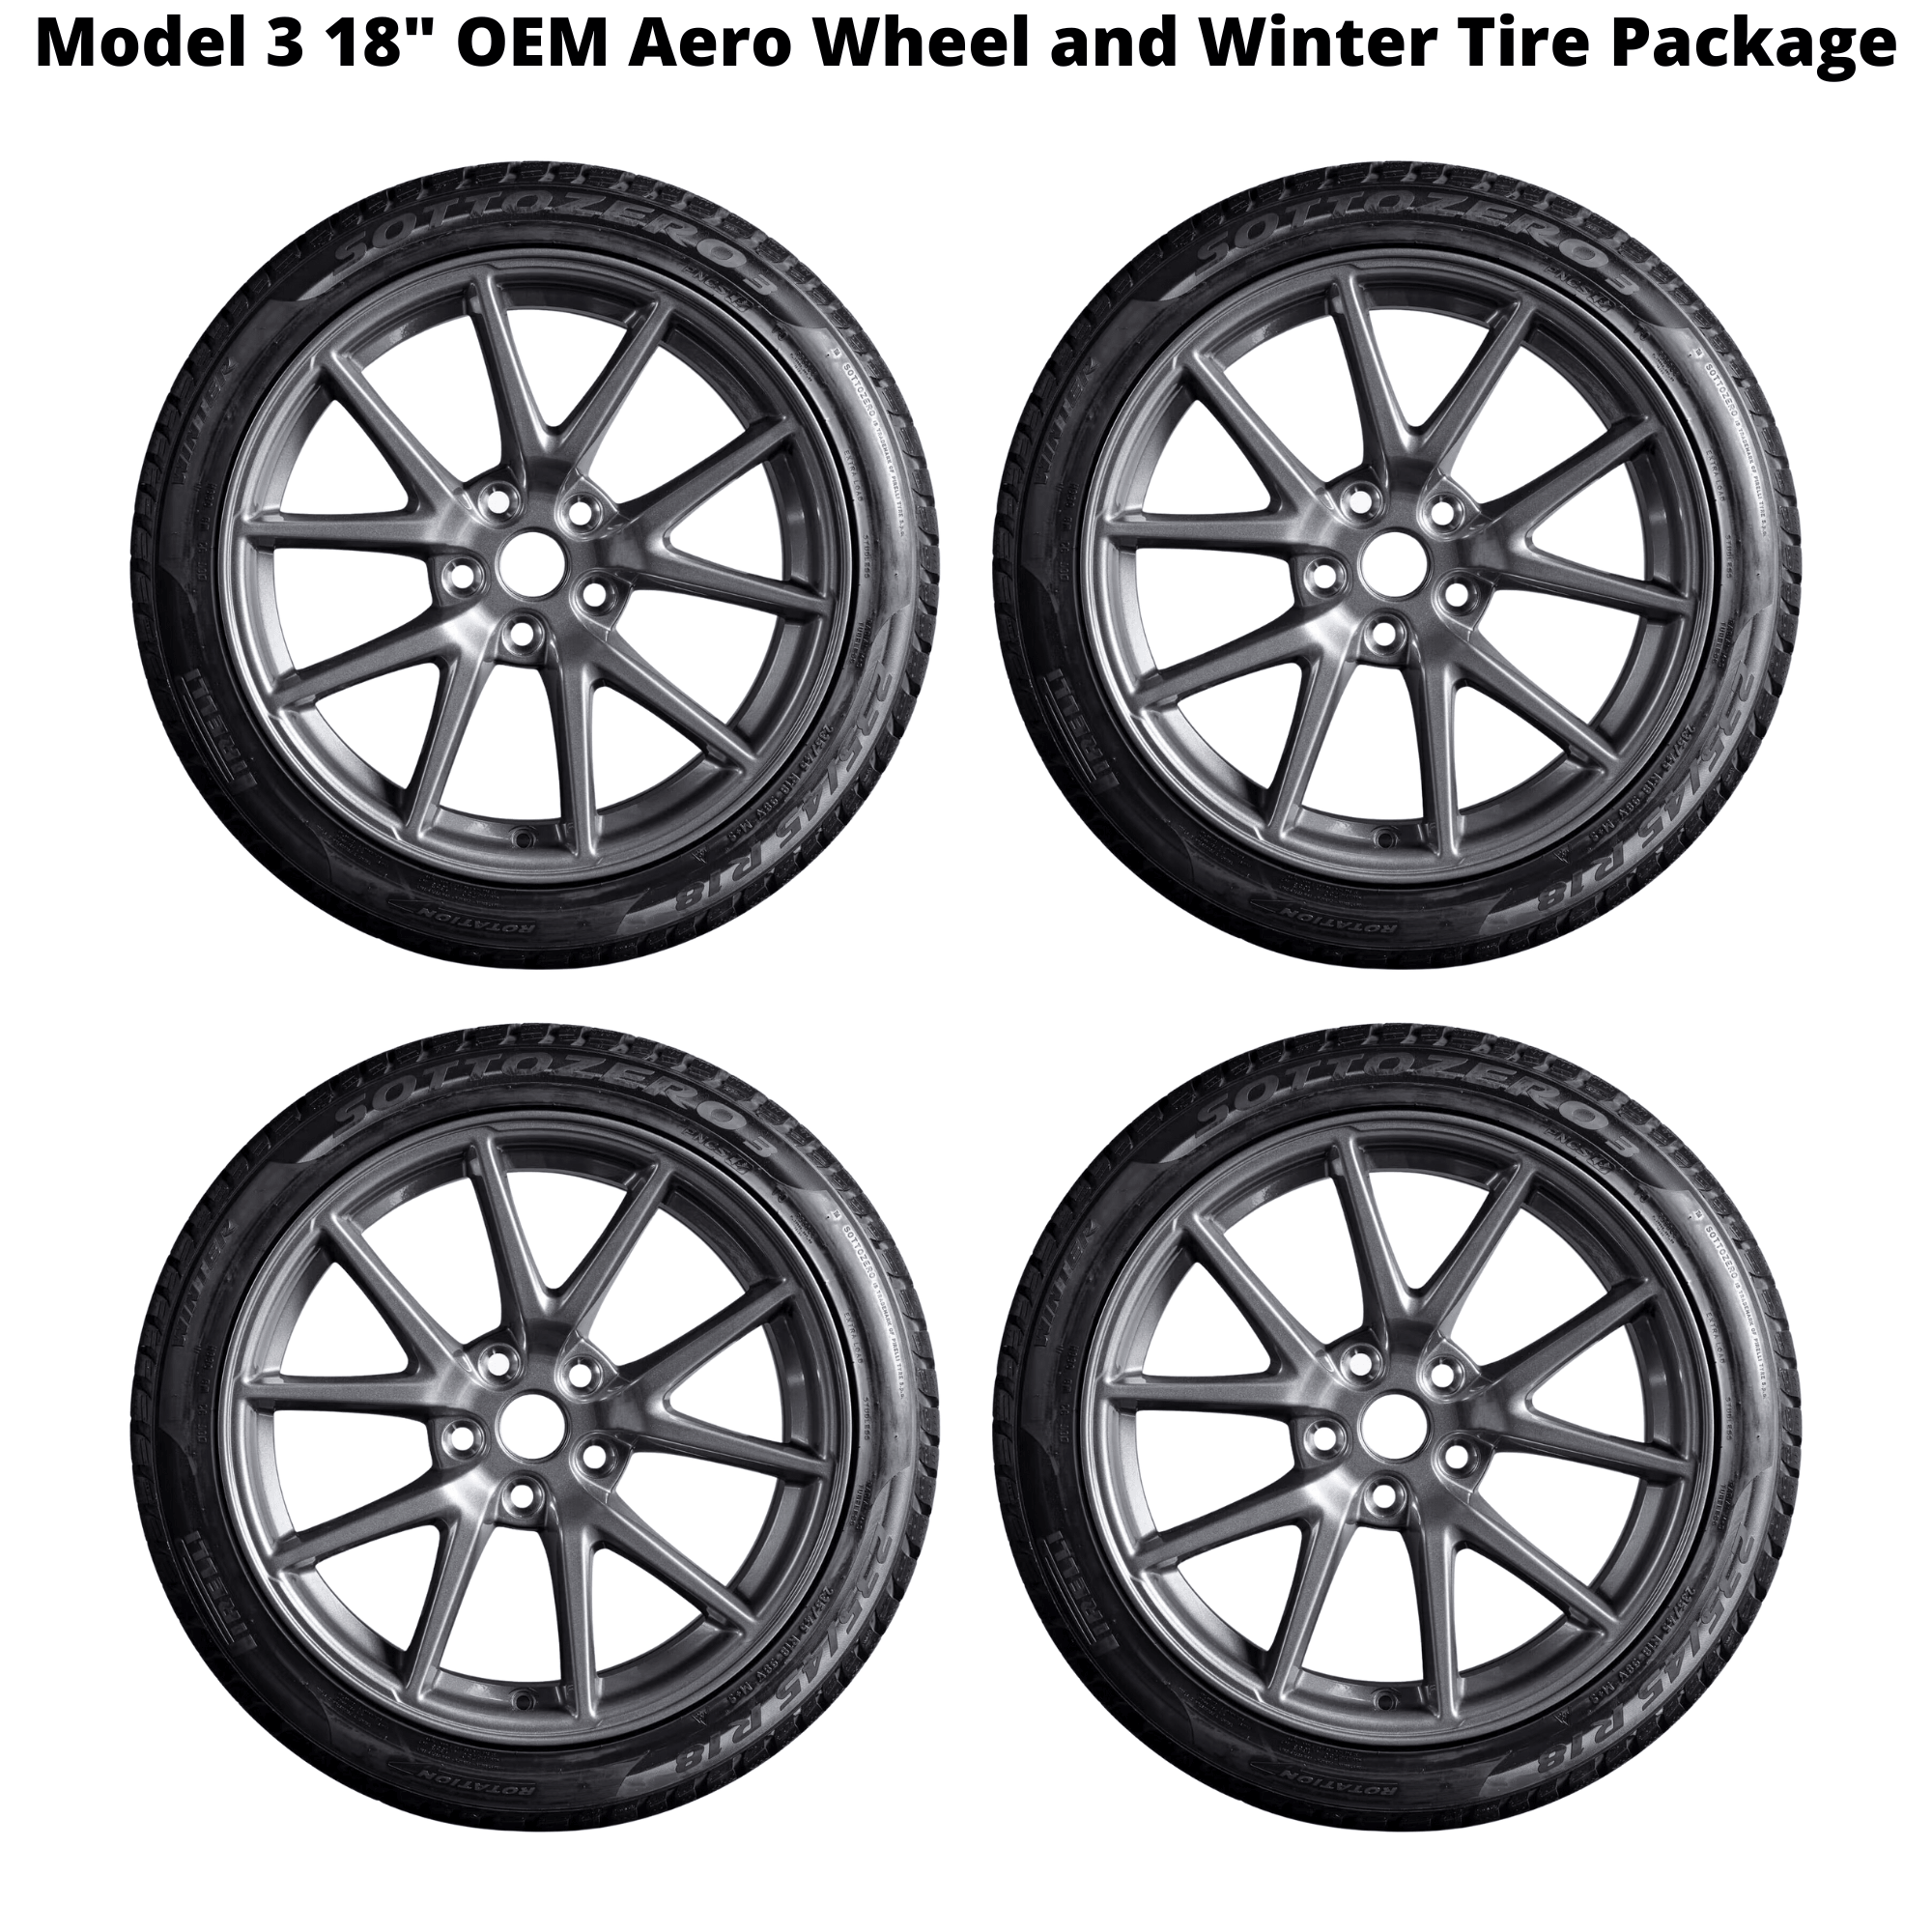 Model 3 18" Tesla Aero Wheel and Winter Tire Package - GOEVPARTS